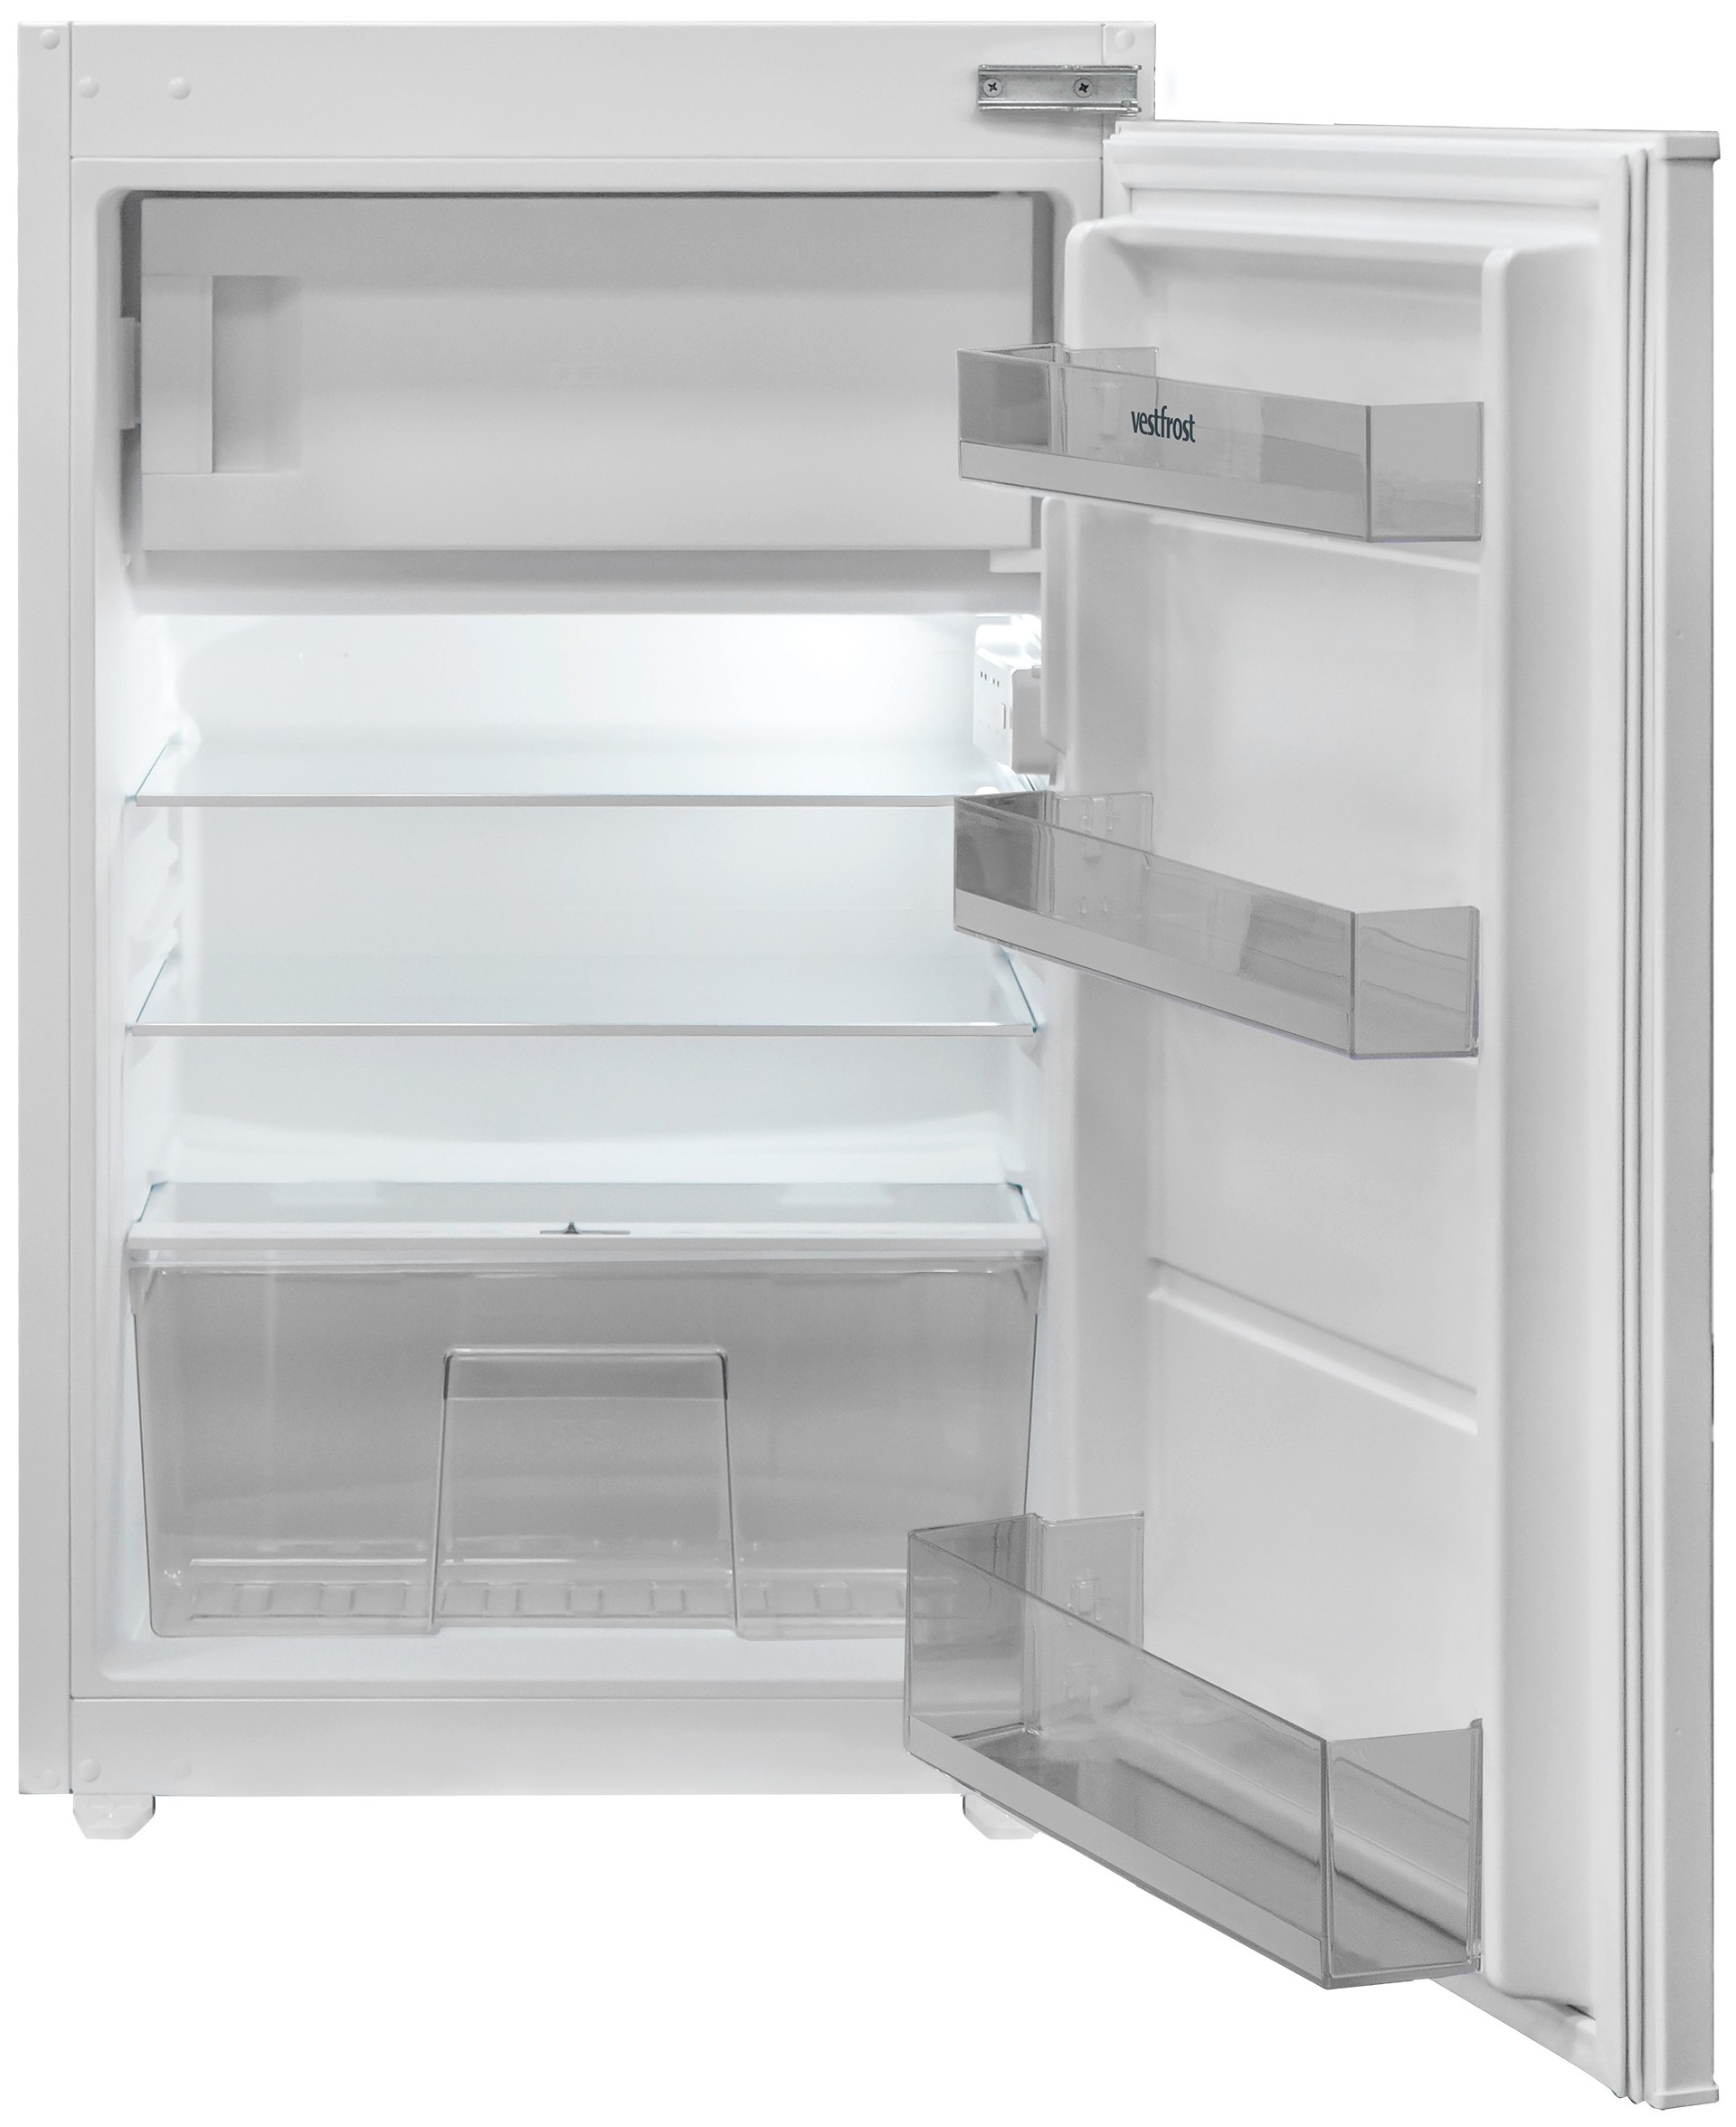 Холодильник  Vestfrost BITT 88 F цена 11399.00 грн - фотография 2